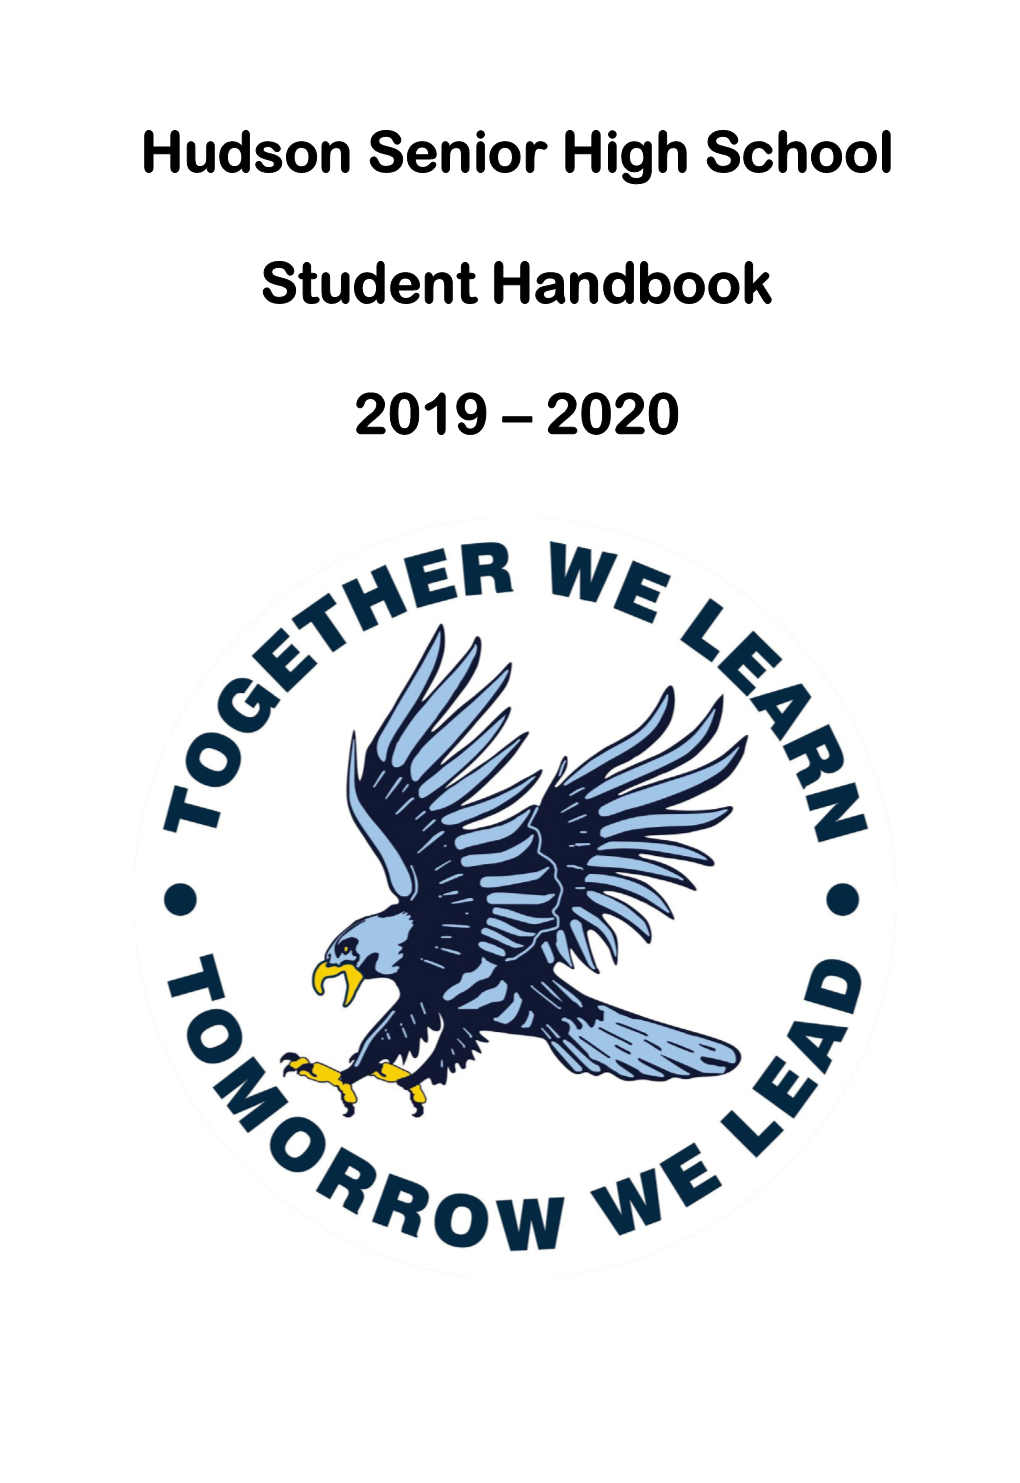 Hudson Senior High School Student Handbook 2019-2020